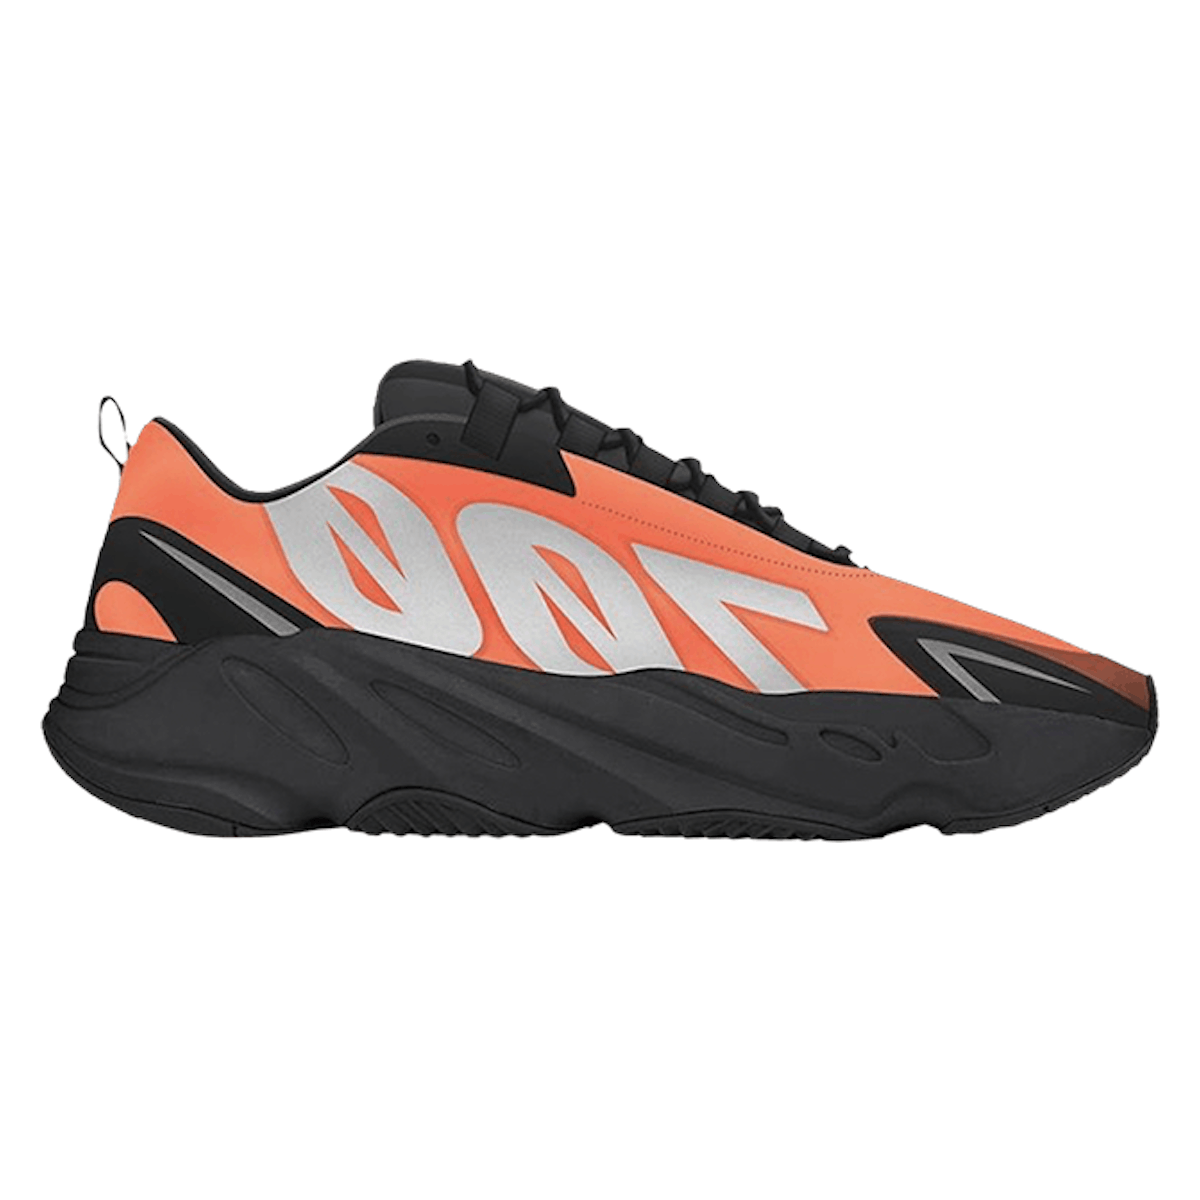 Adidas Yeezy Boost 700 MNVN "Orange"